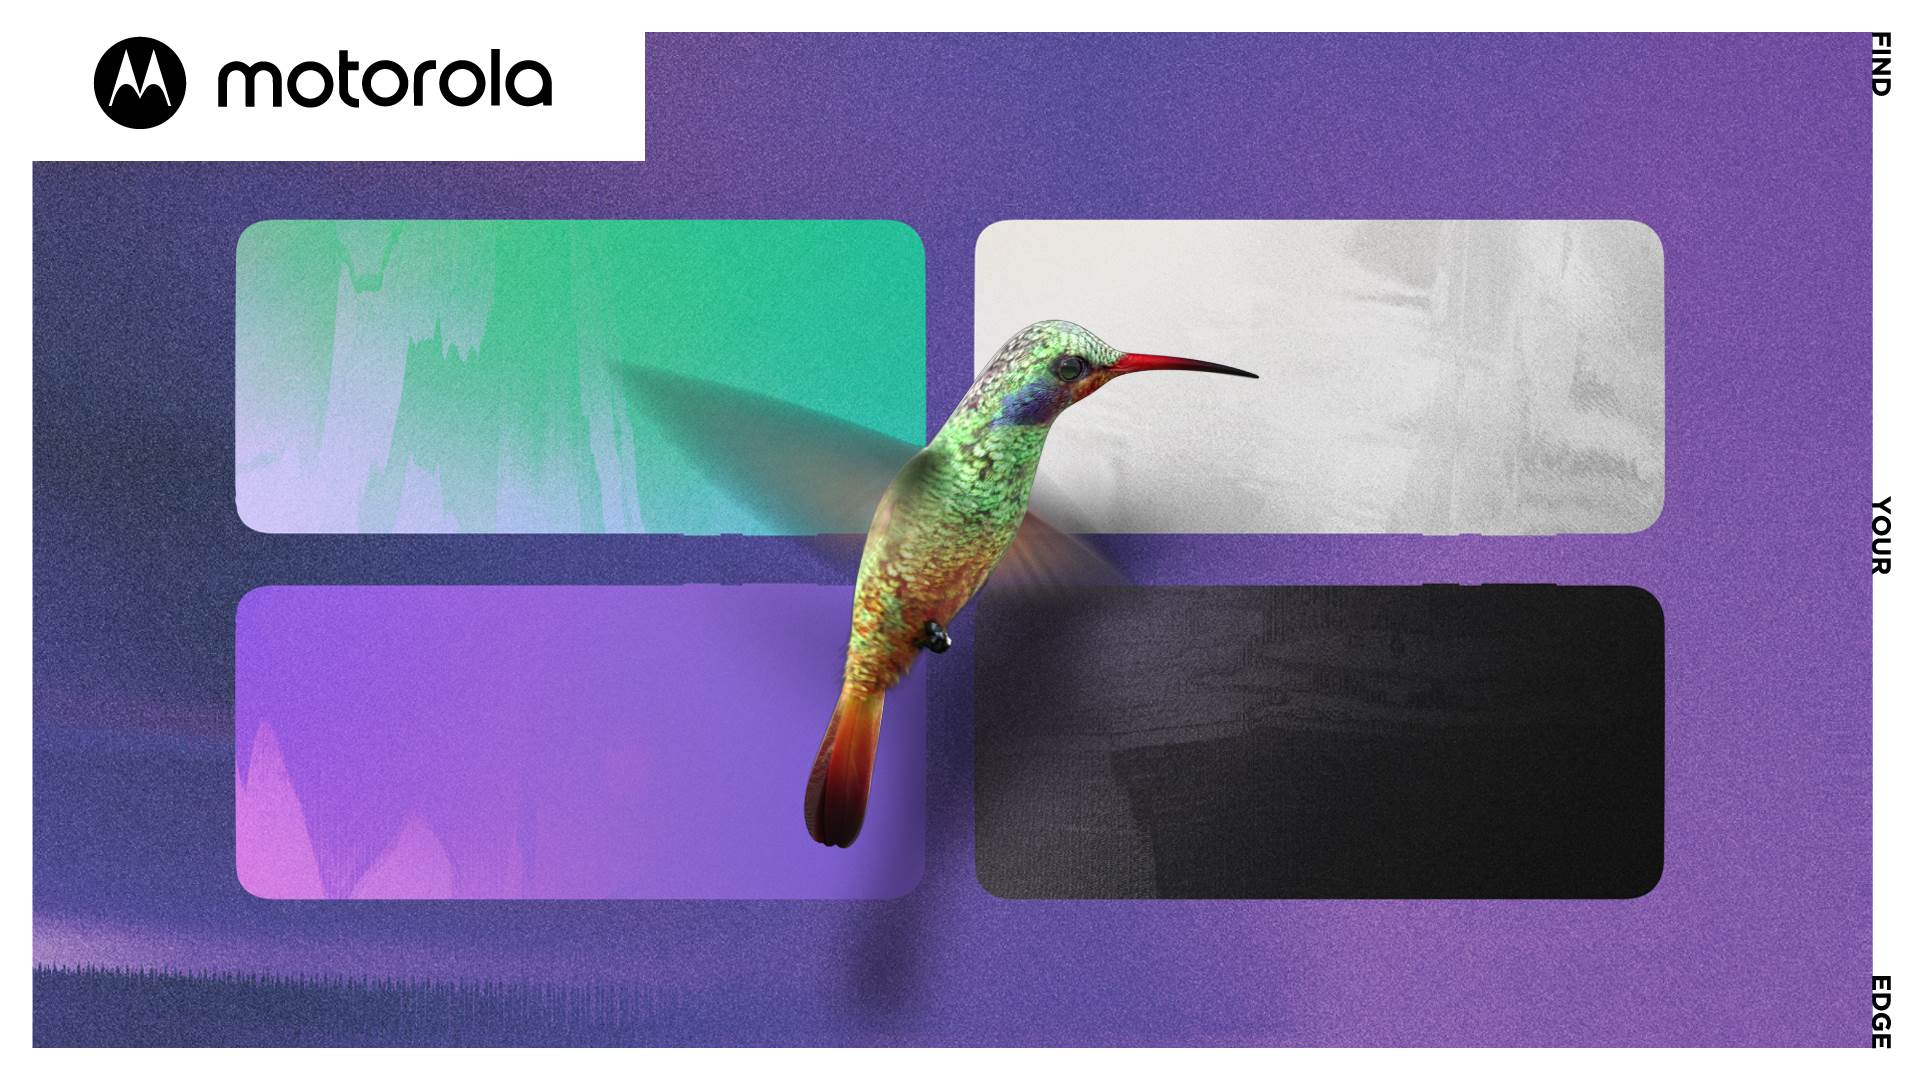  Motorola Milano (1).jpg 